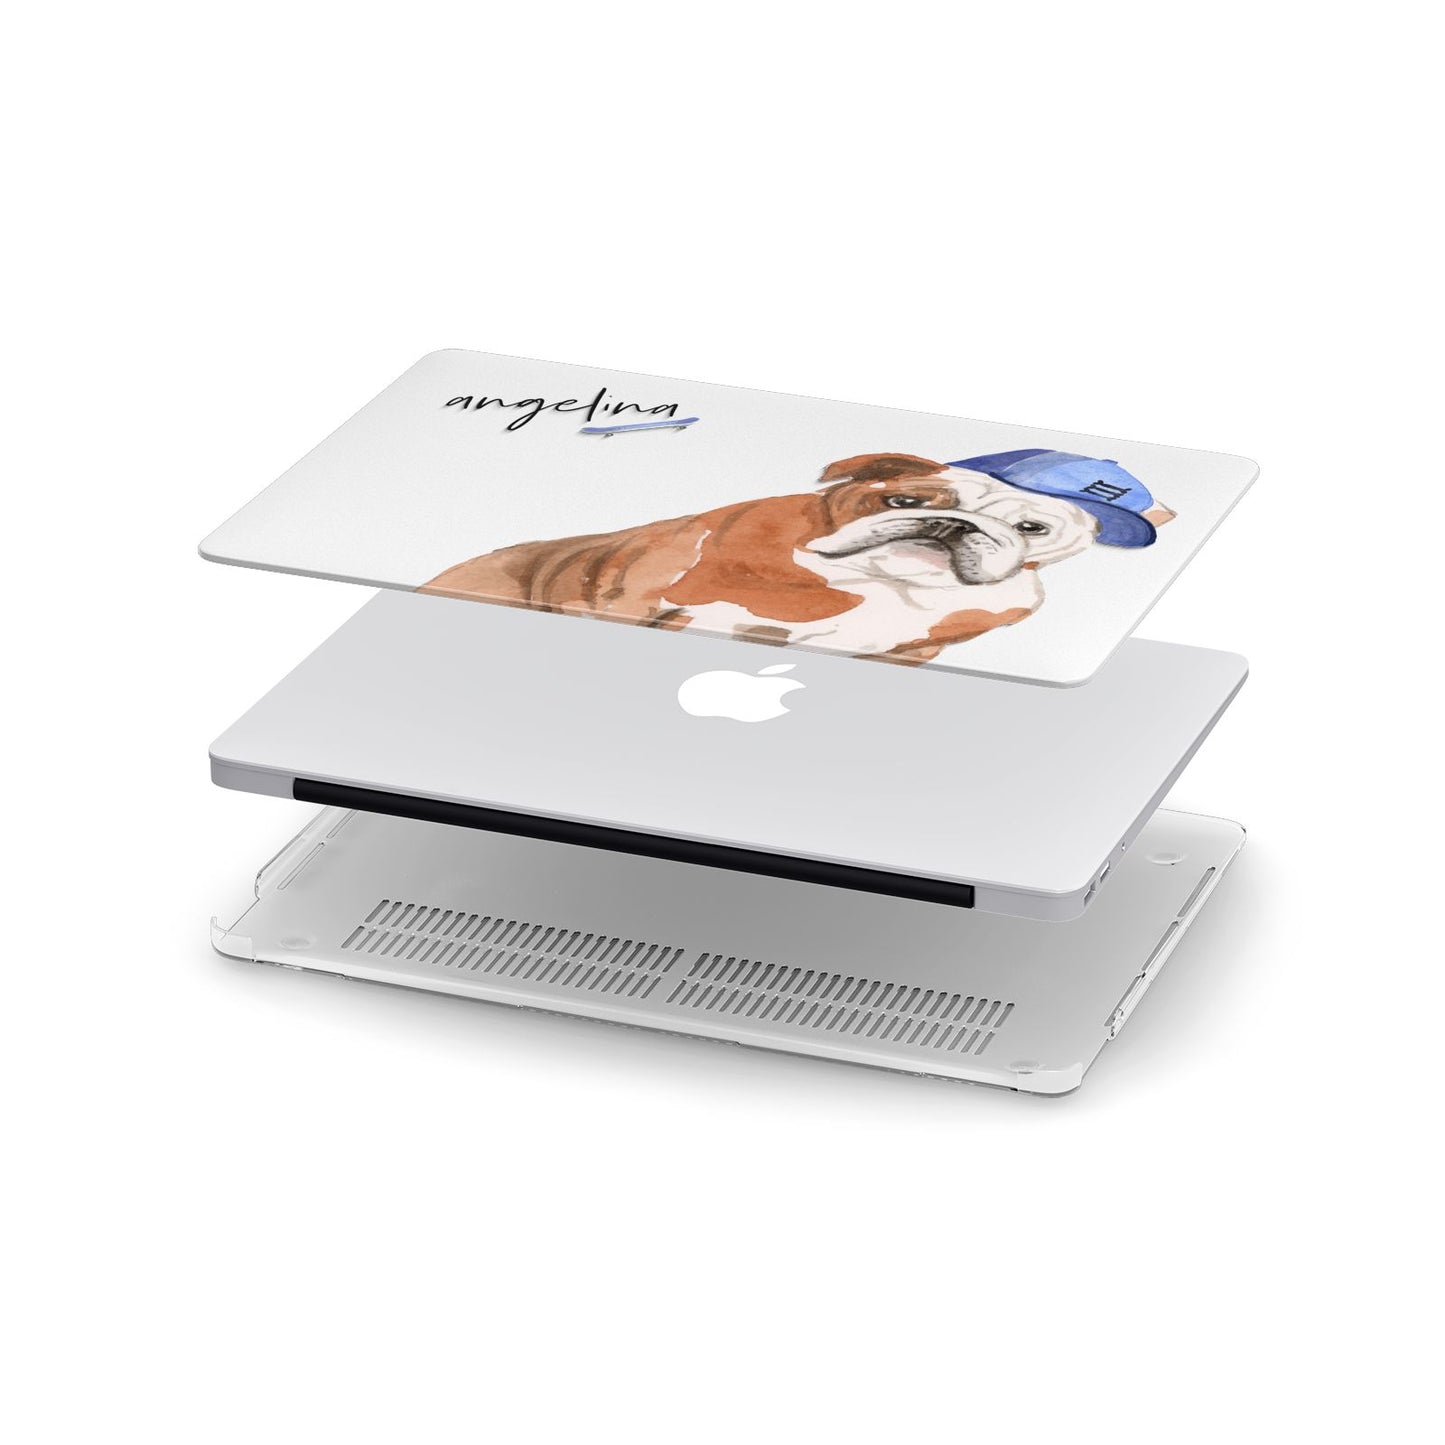 Personalised English Bulldog Apple MacBook Case in Detail